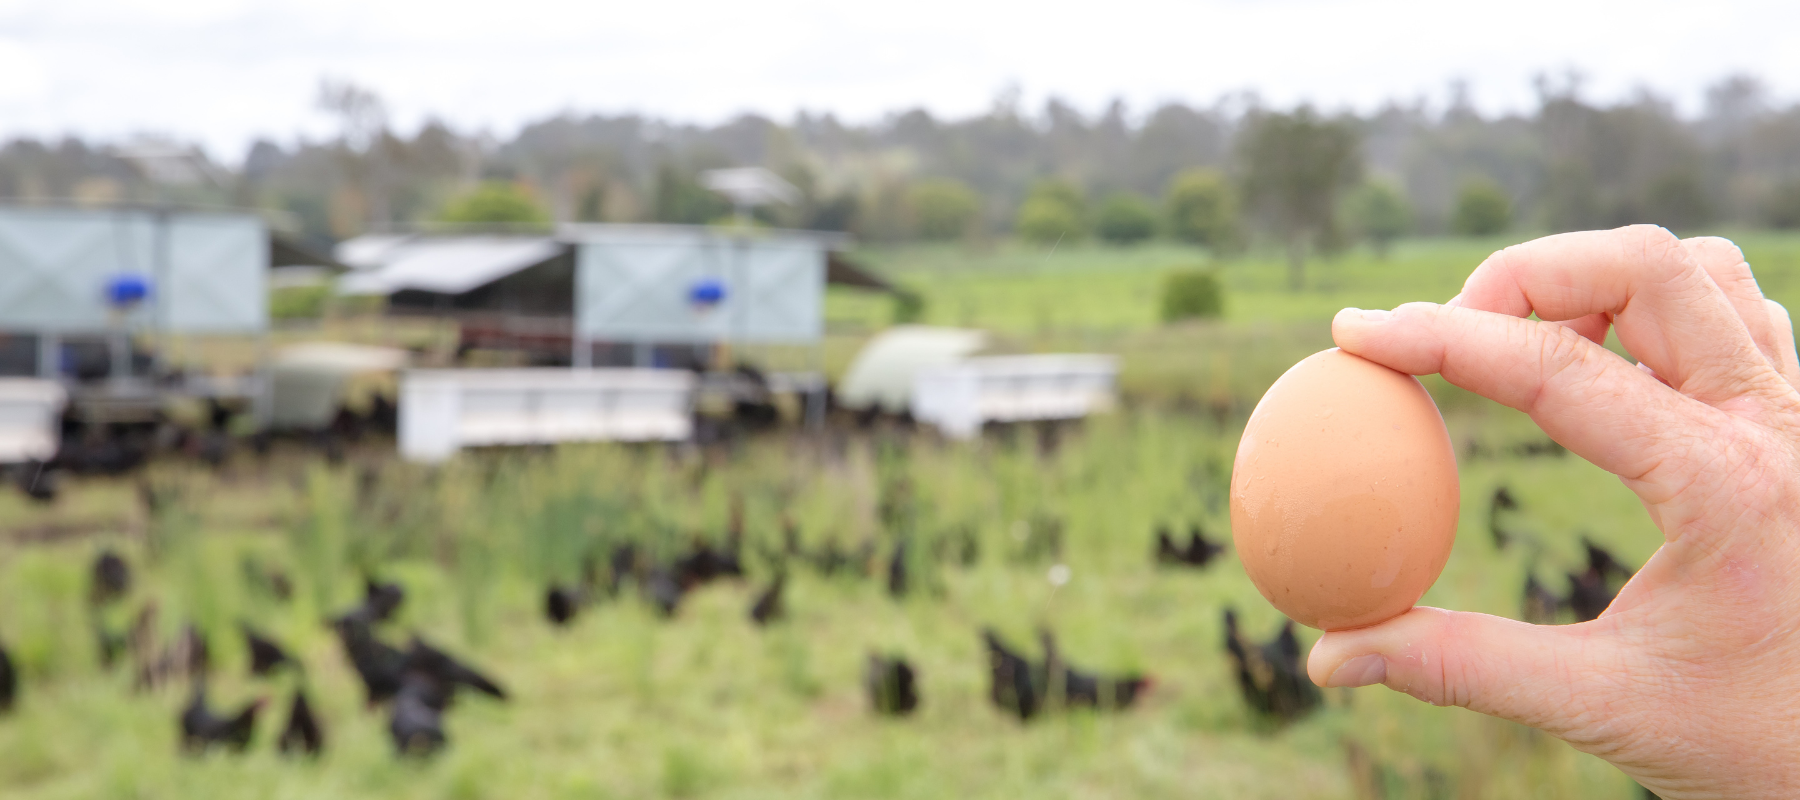 Pastured eggs: Better for chickens, better for us